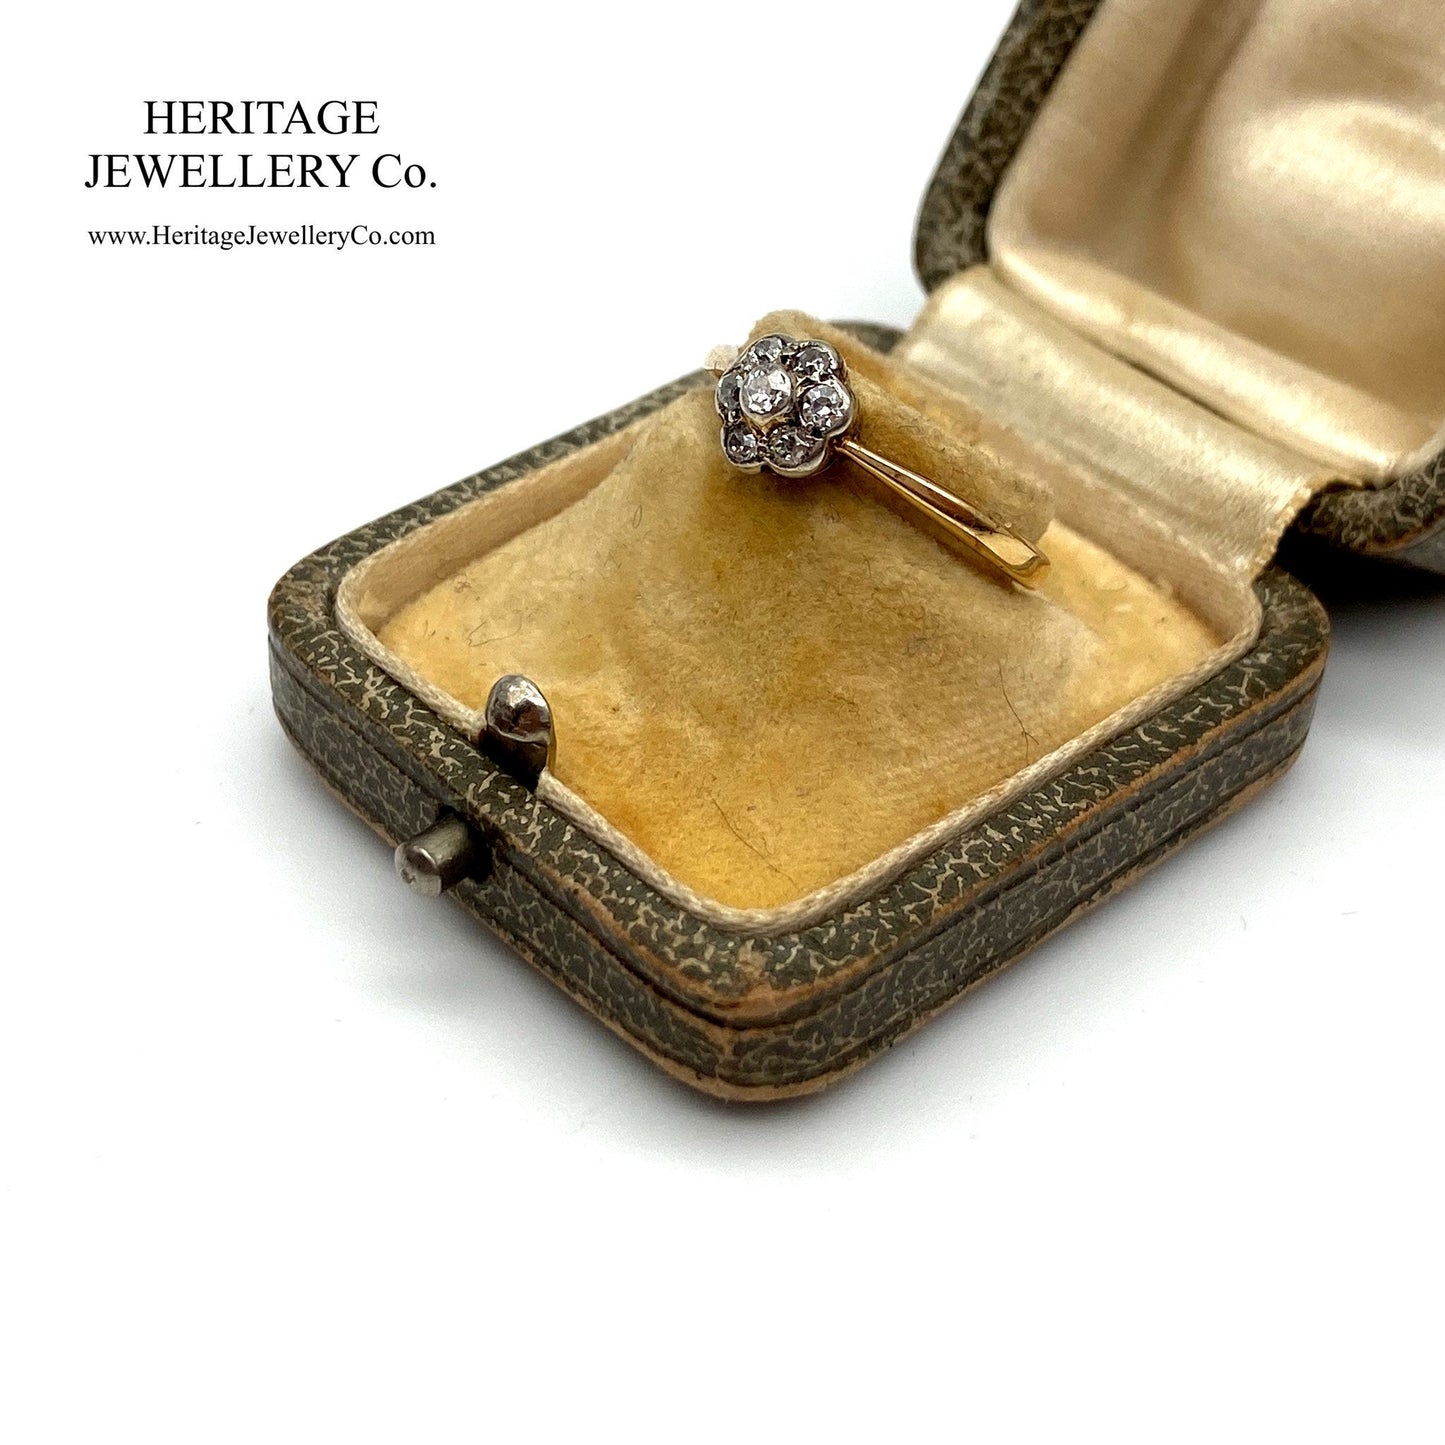 Antique Diamond Daisy Cluster Ring